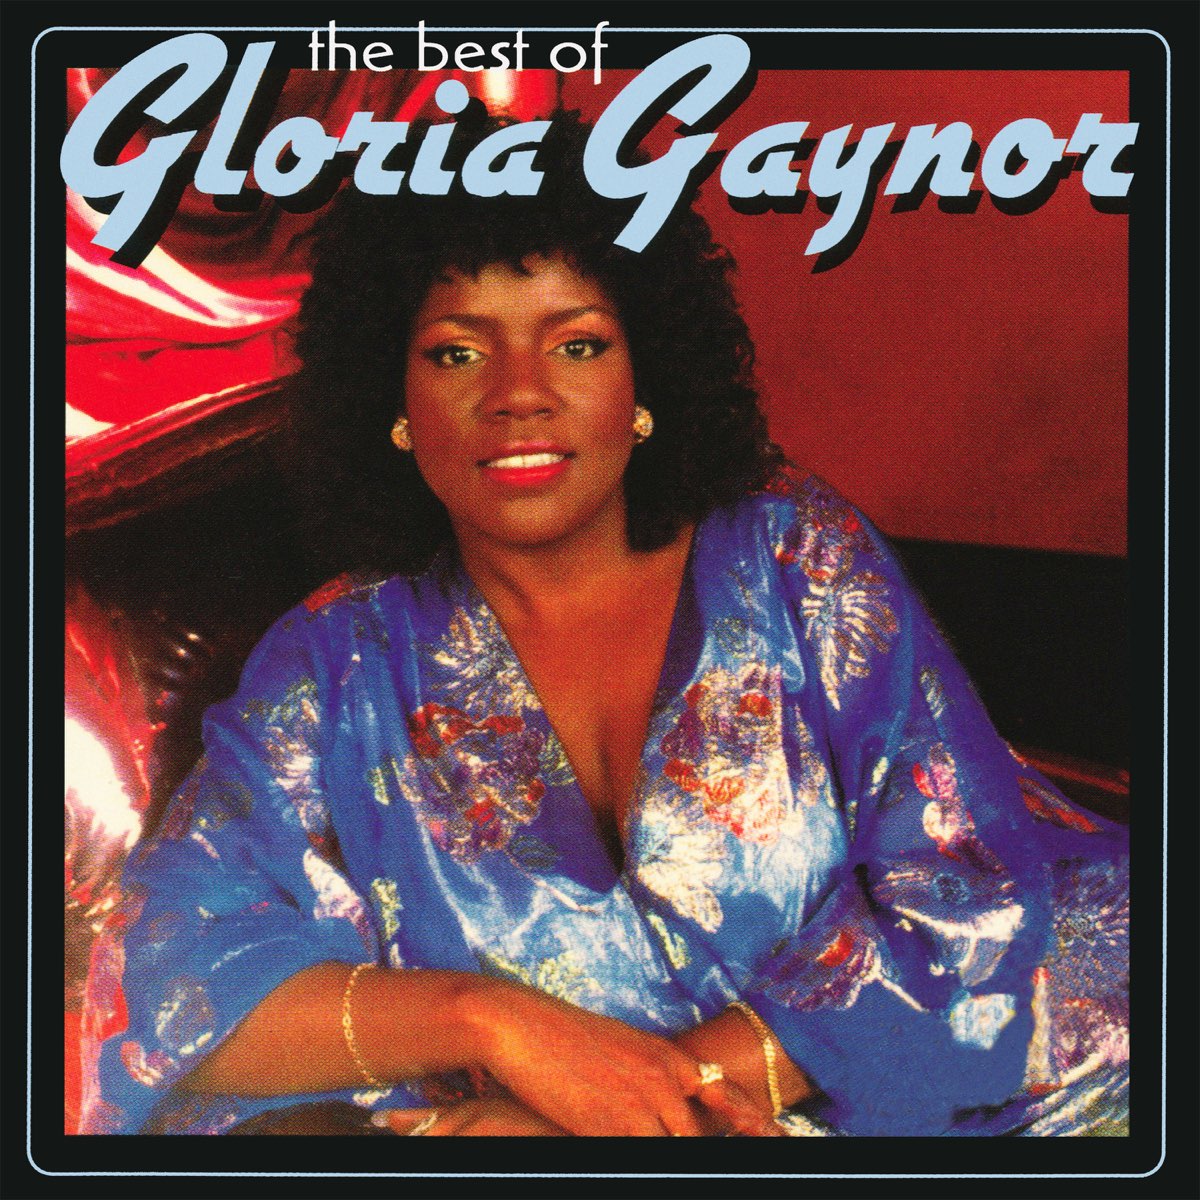 The Best Of Gloria Gaynor - Album by Gloria Gaynor - Apple Music